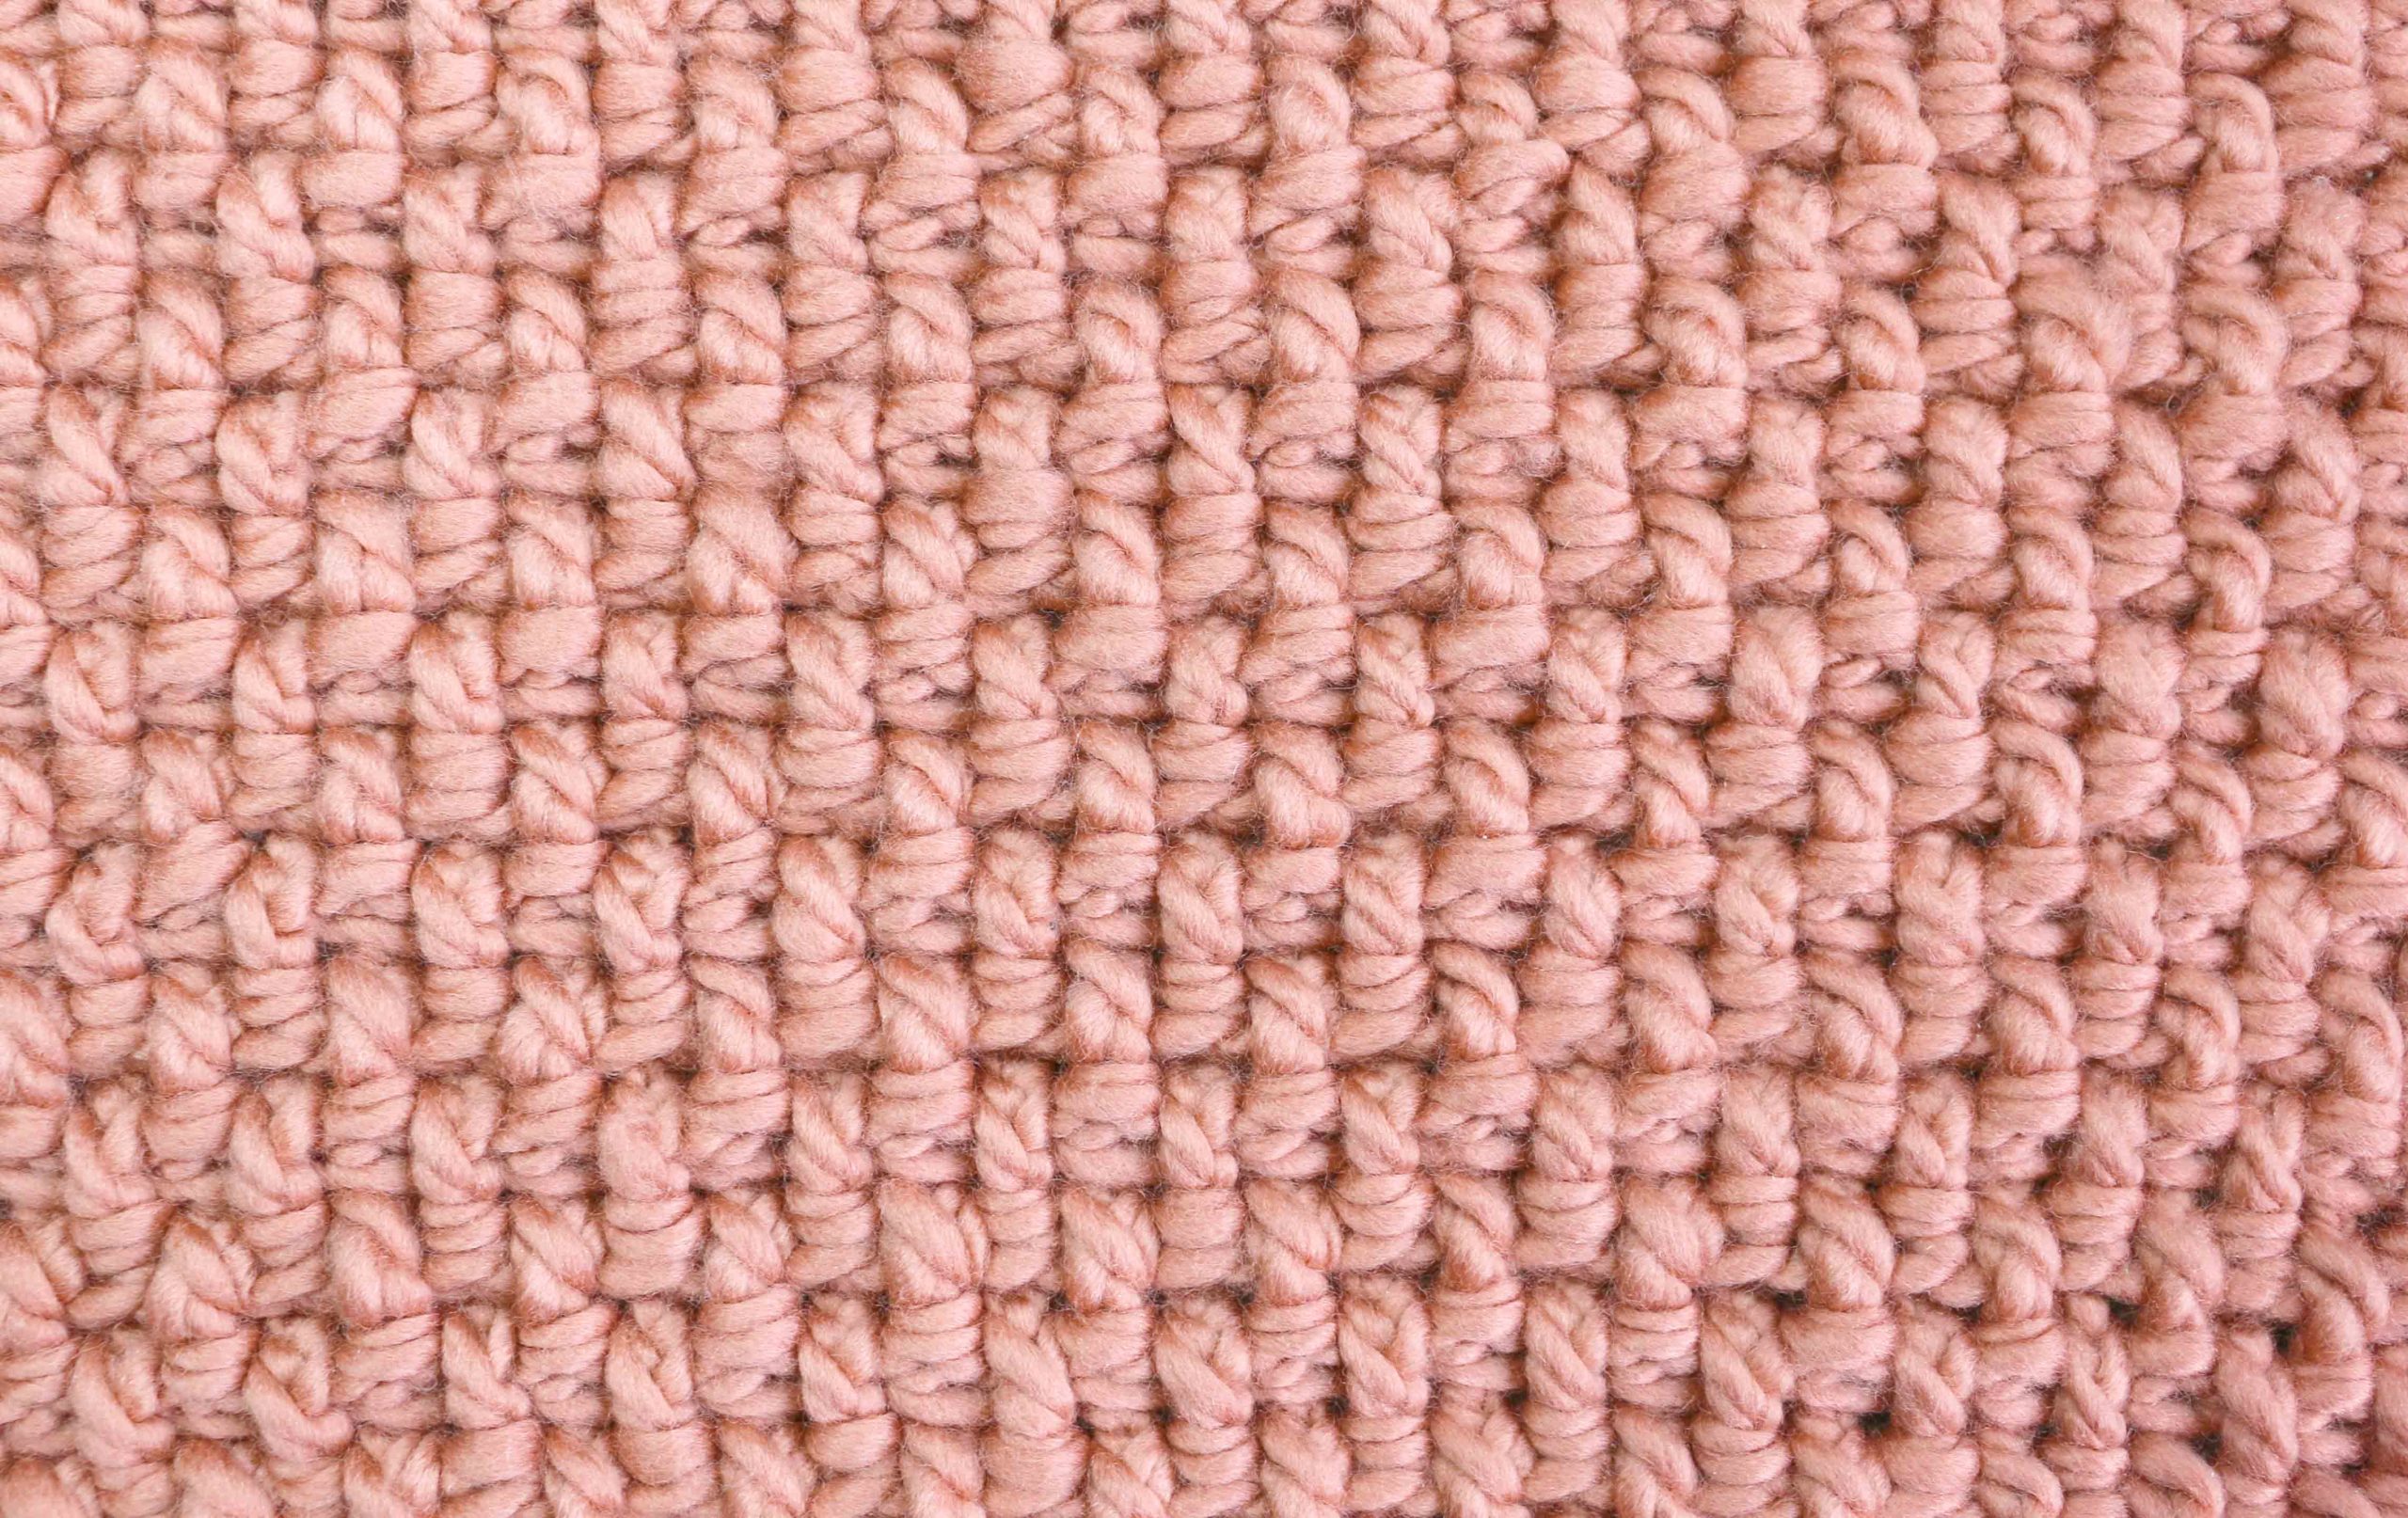 seed stittch mini basketwave crochet free pattern